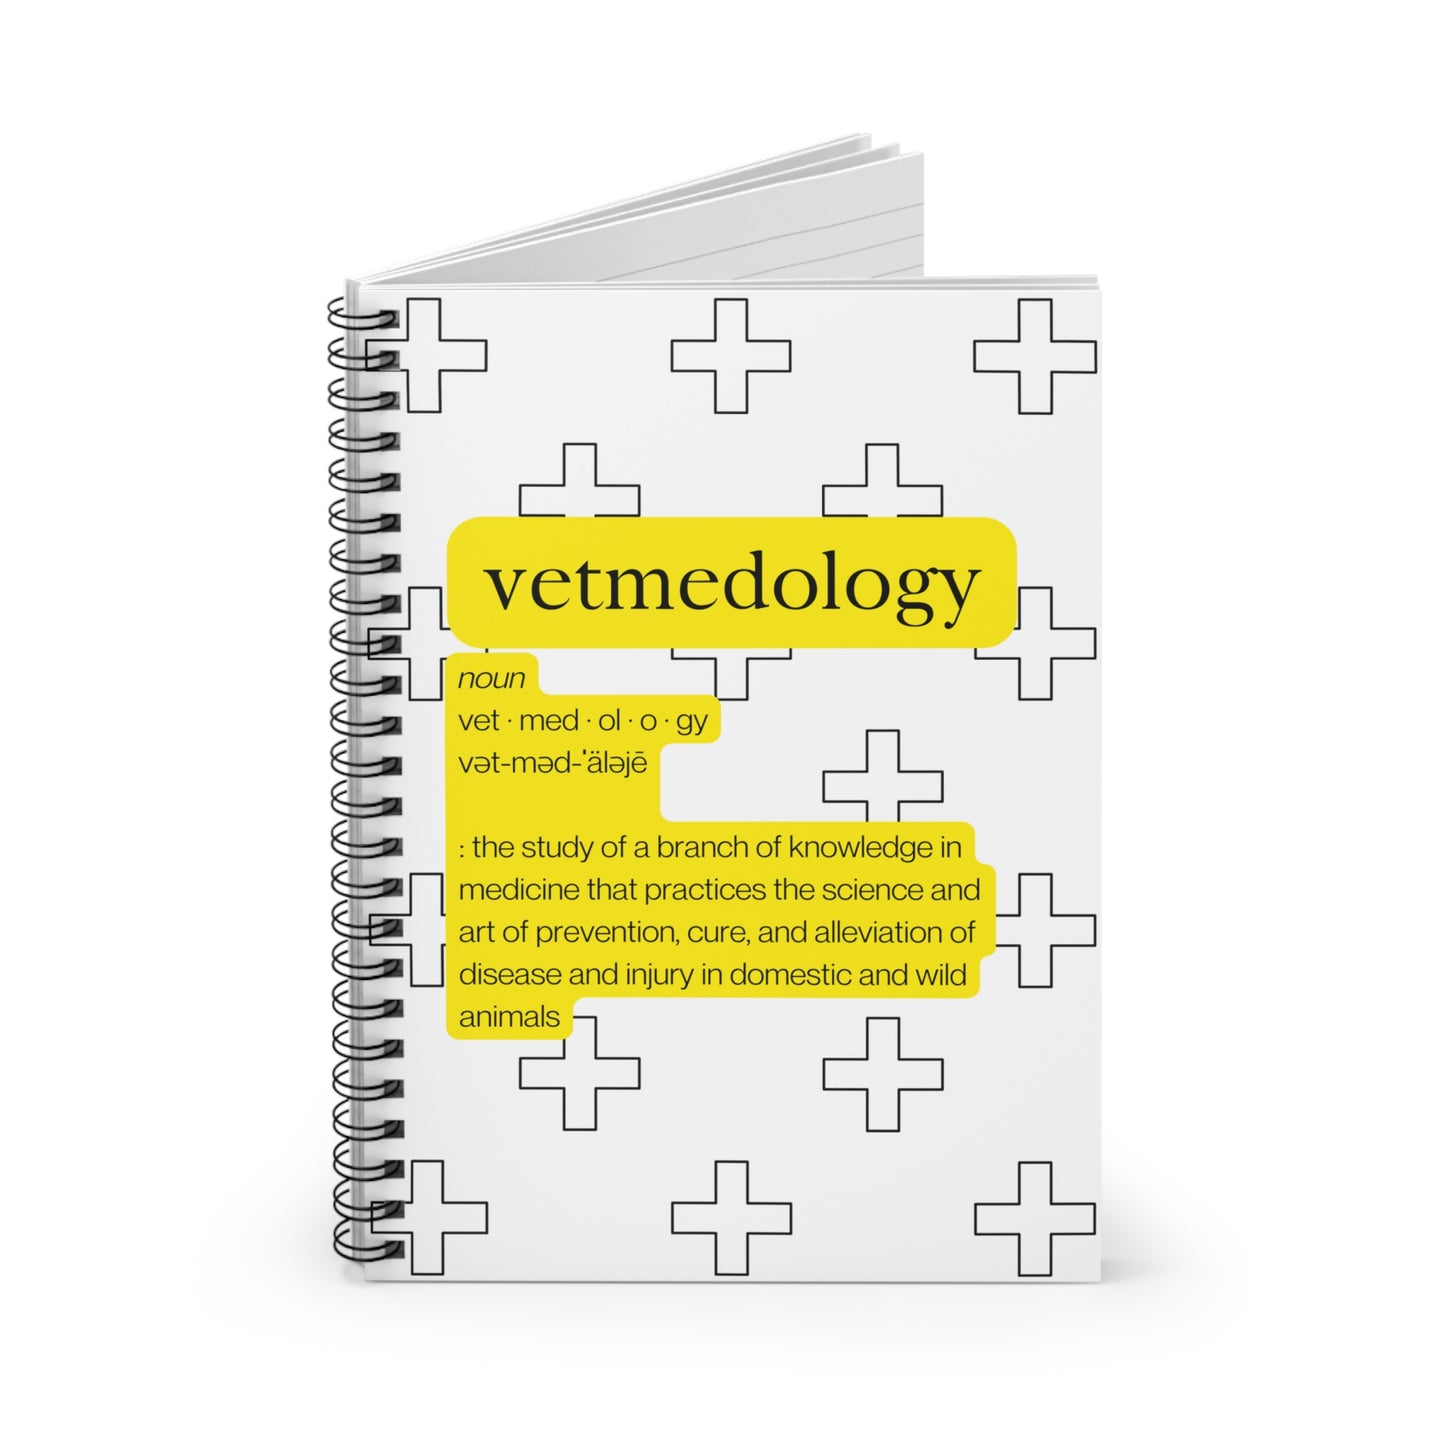 vetmedology Highlighted Definition Spiral Notebook - Ruled Line